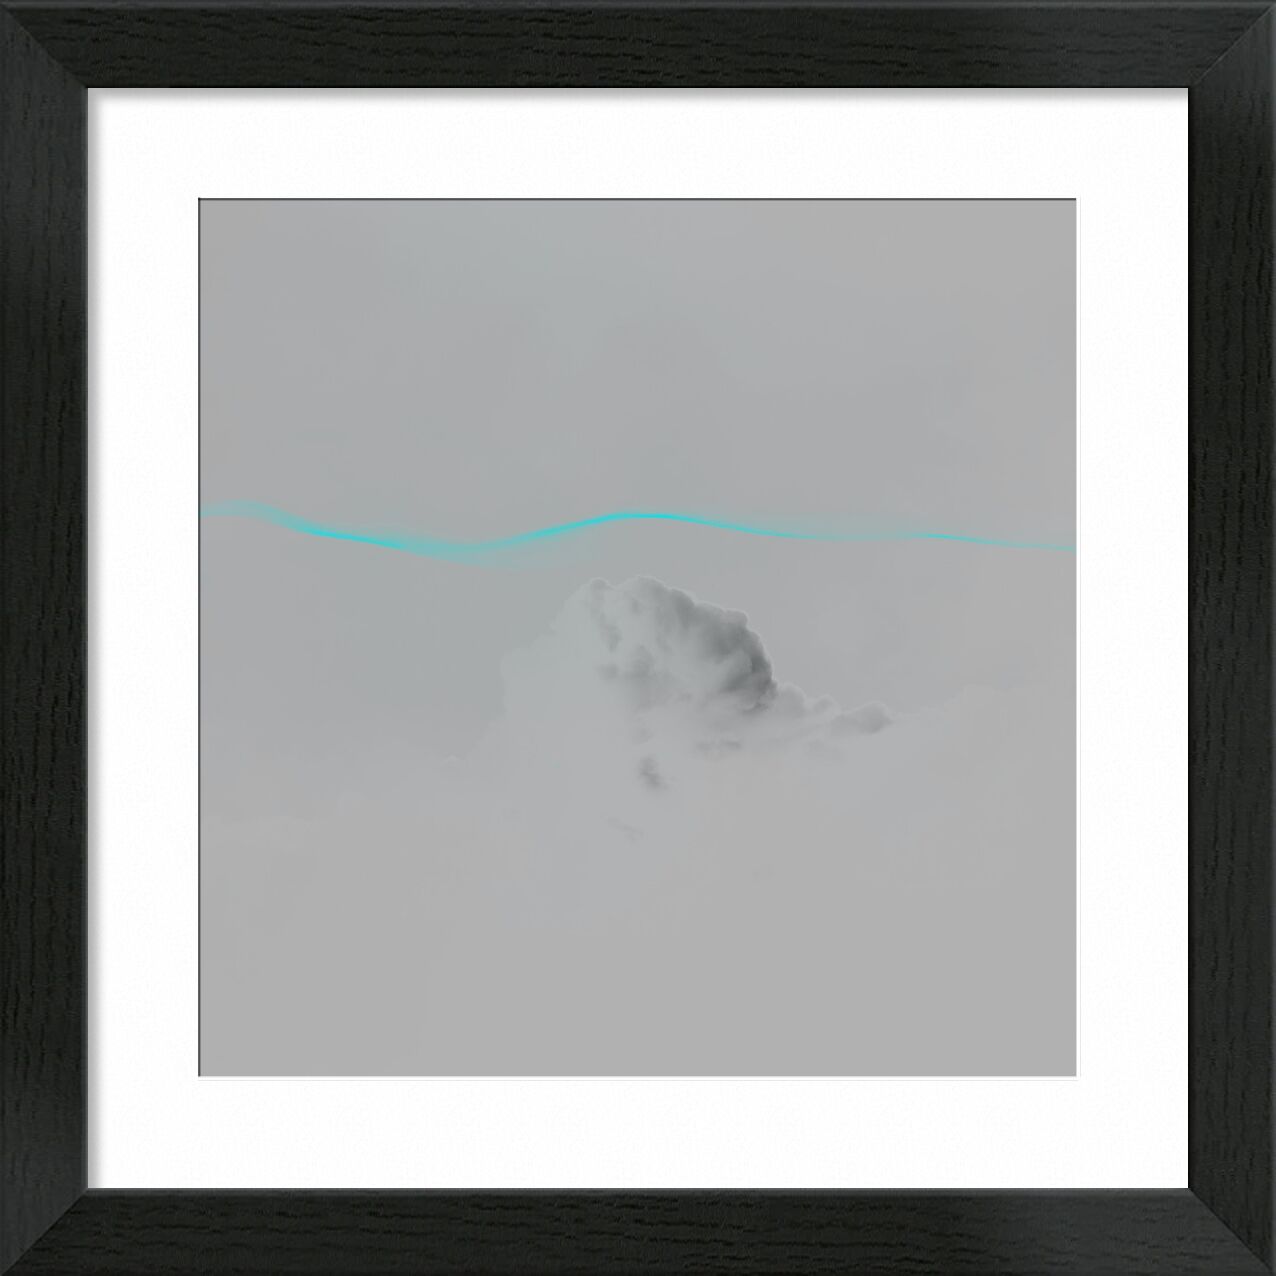 Maky_Epure_2 from Maky Art, Prodi Art, abstract, Blackandwhite, Photo montage, photography, digitalart, clouds